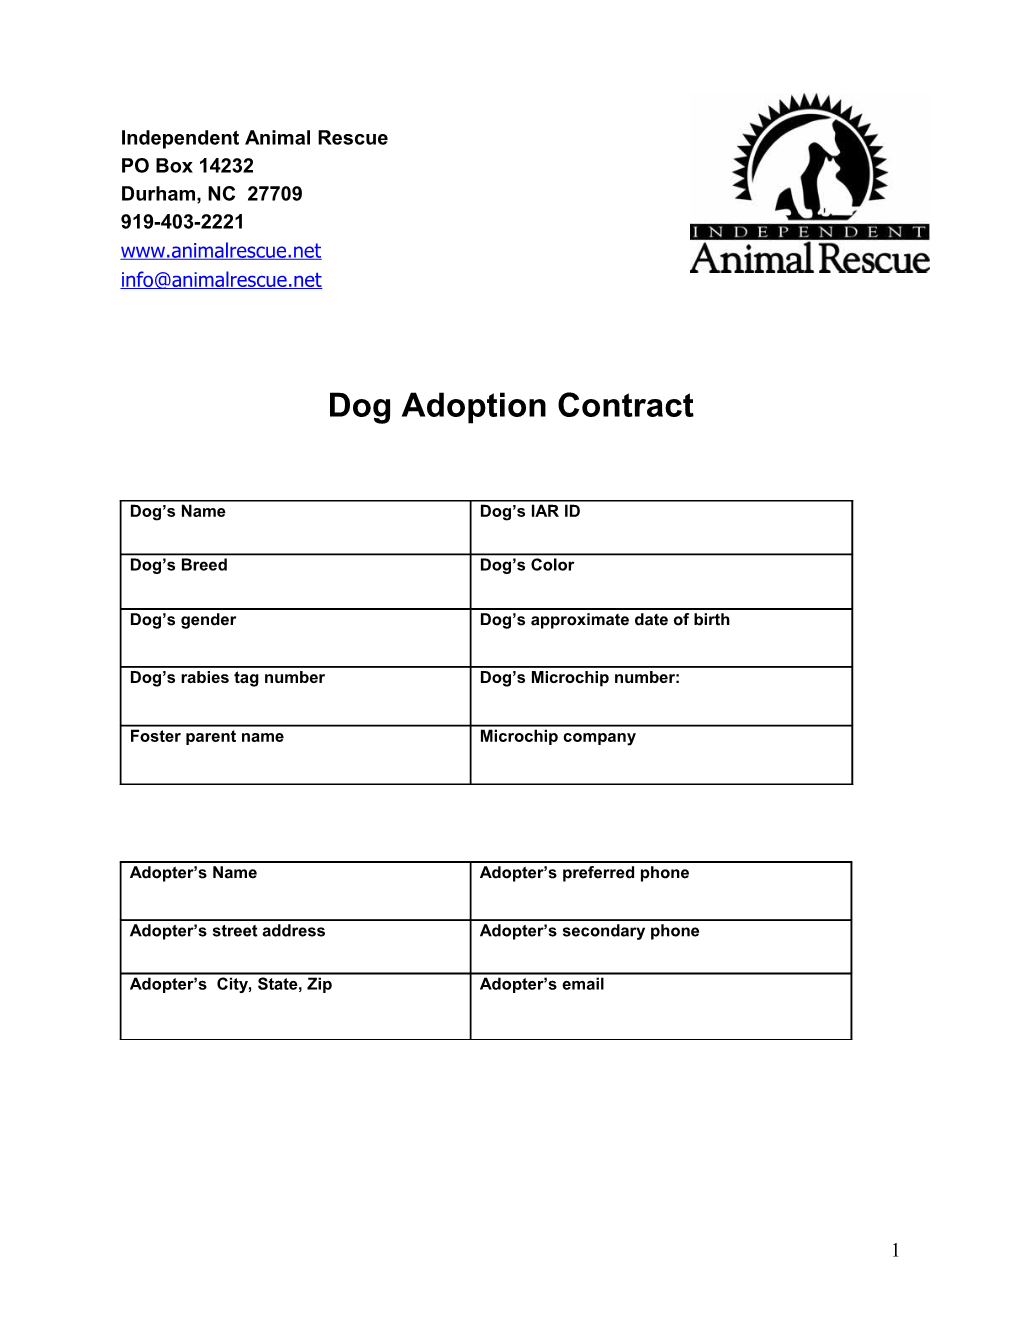 Dog Adoption Contract